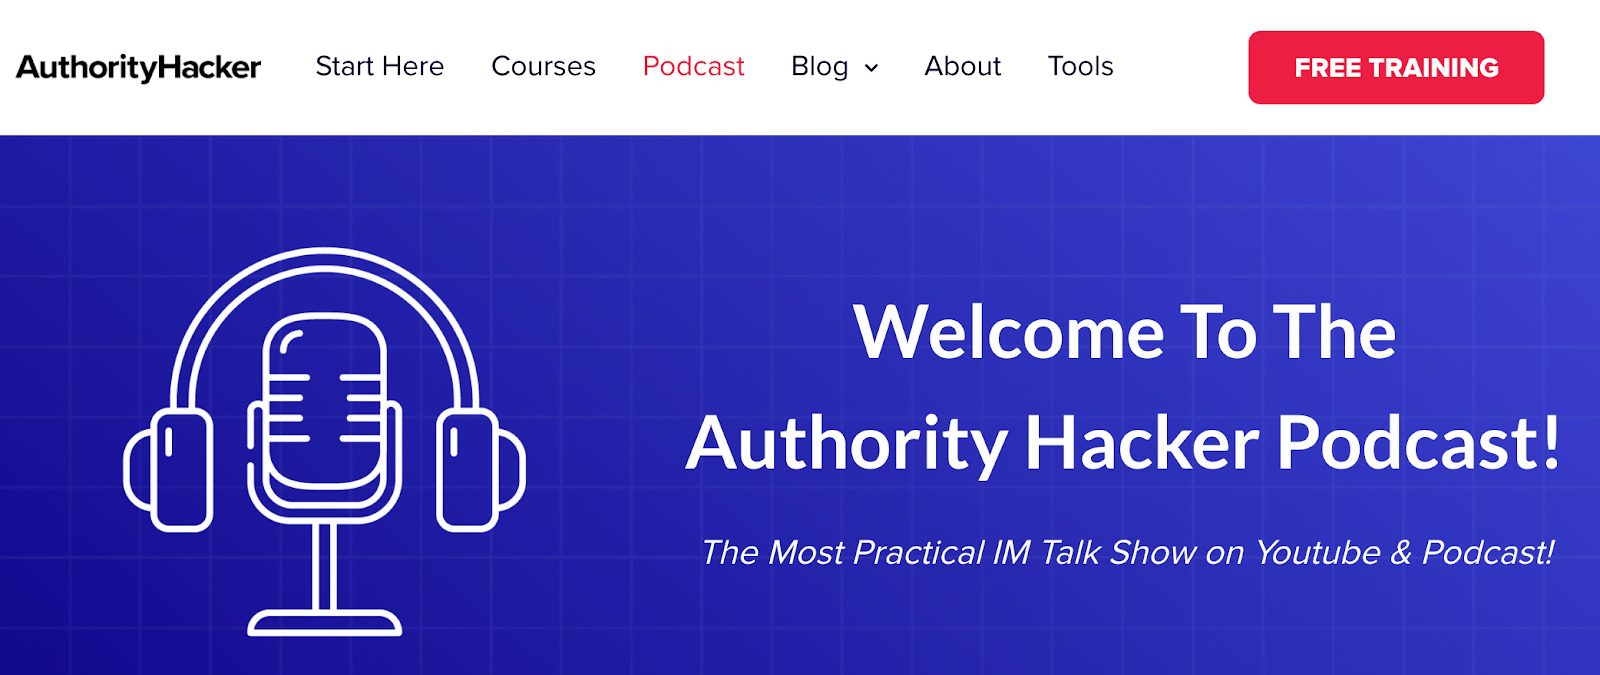 authority hacker podcast